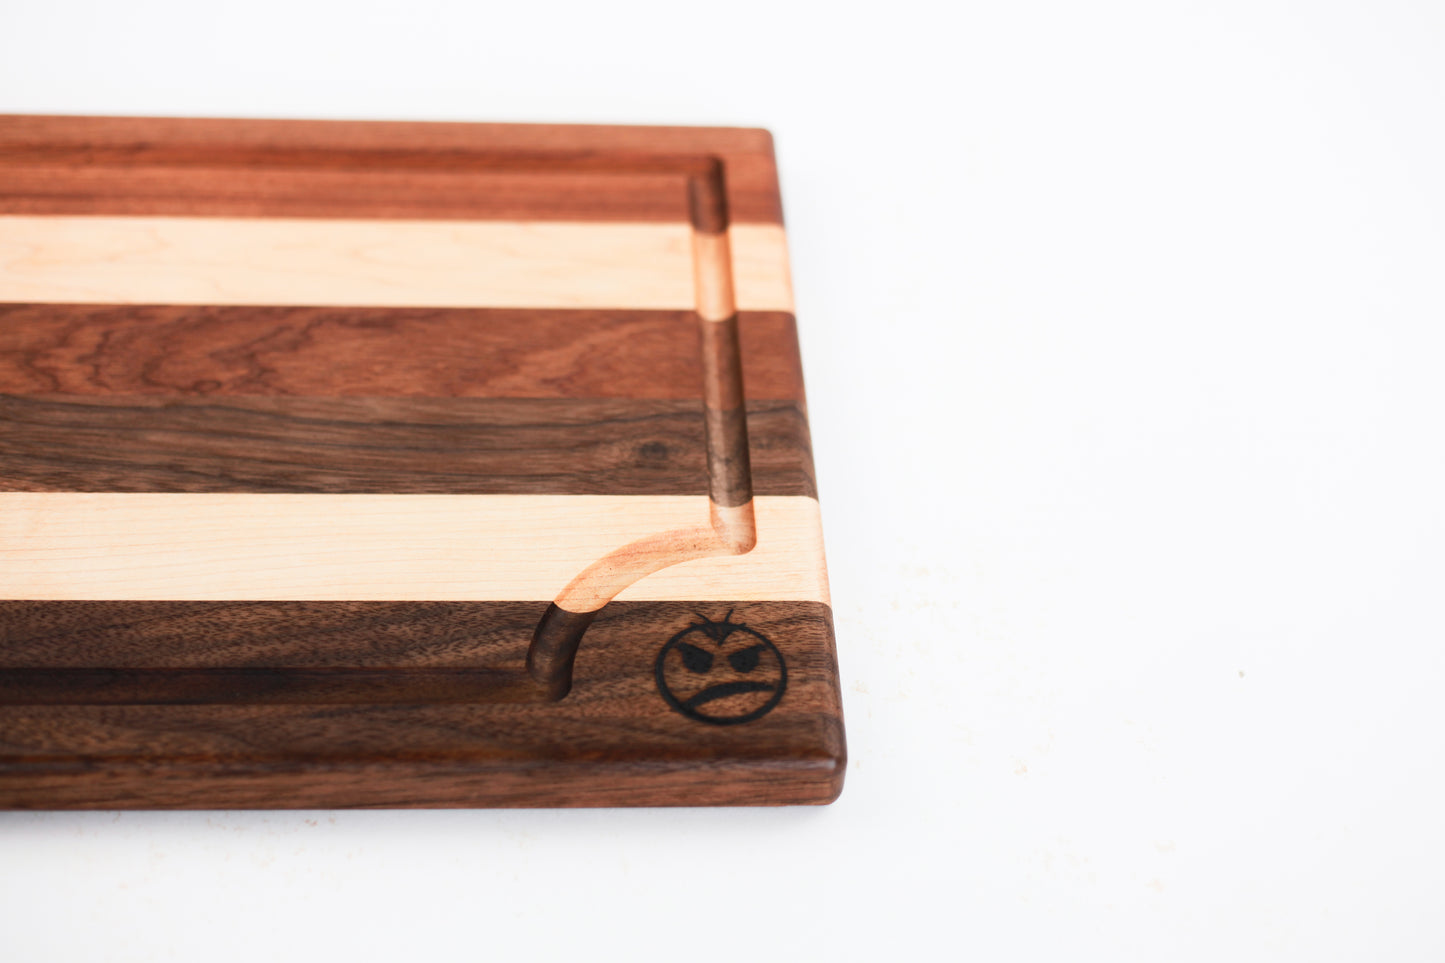 ‘drawer board’ - cutting board